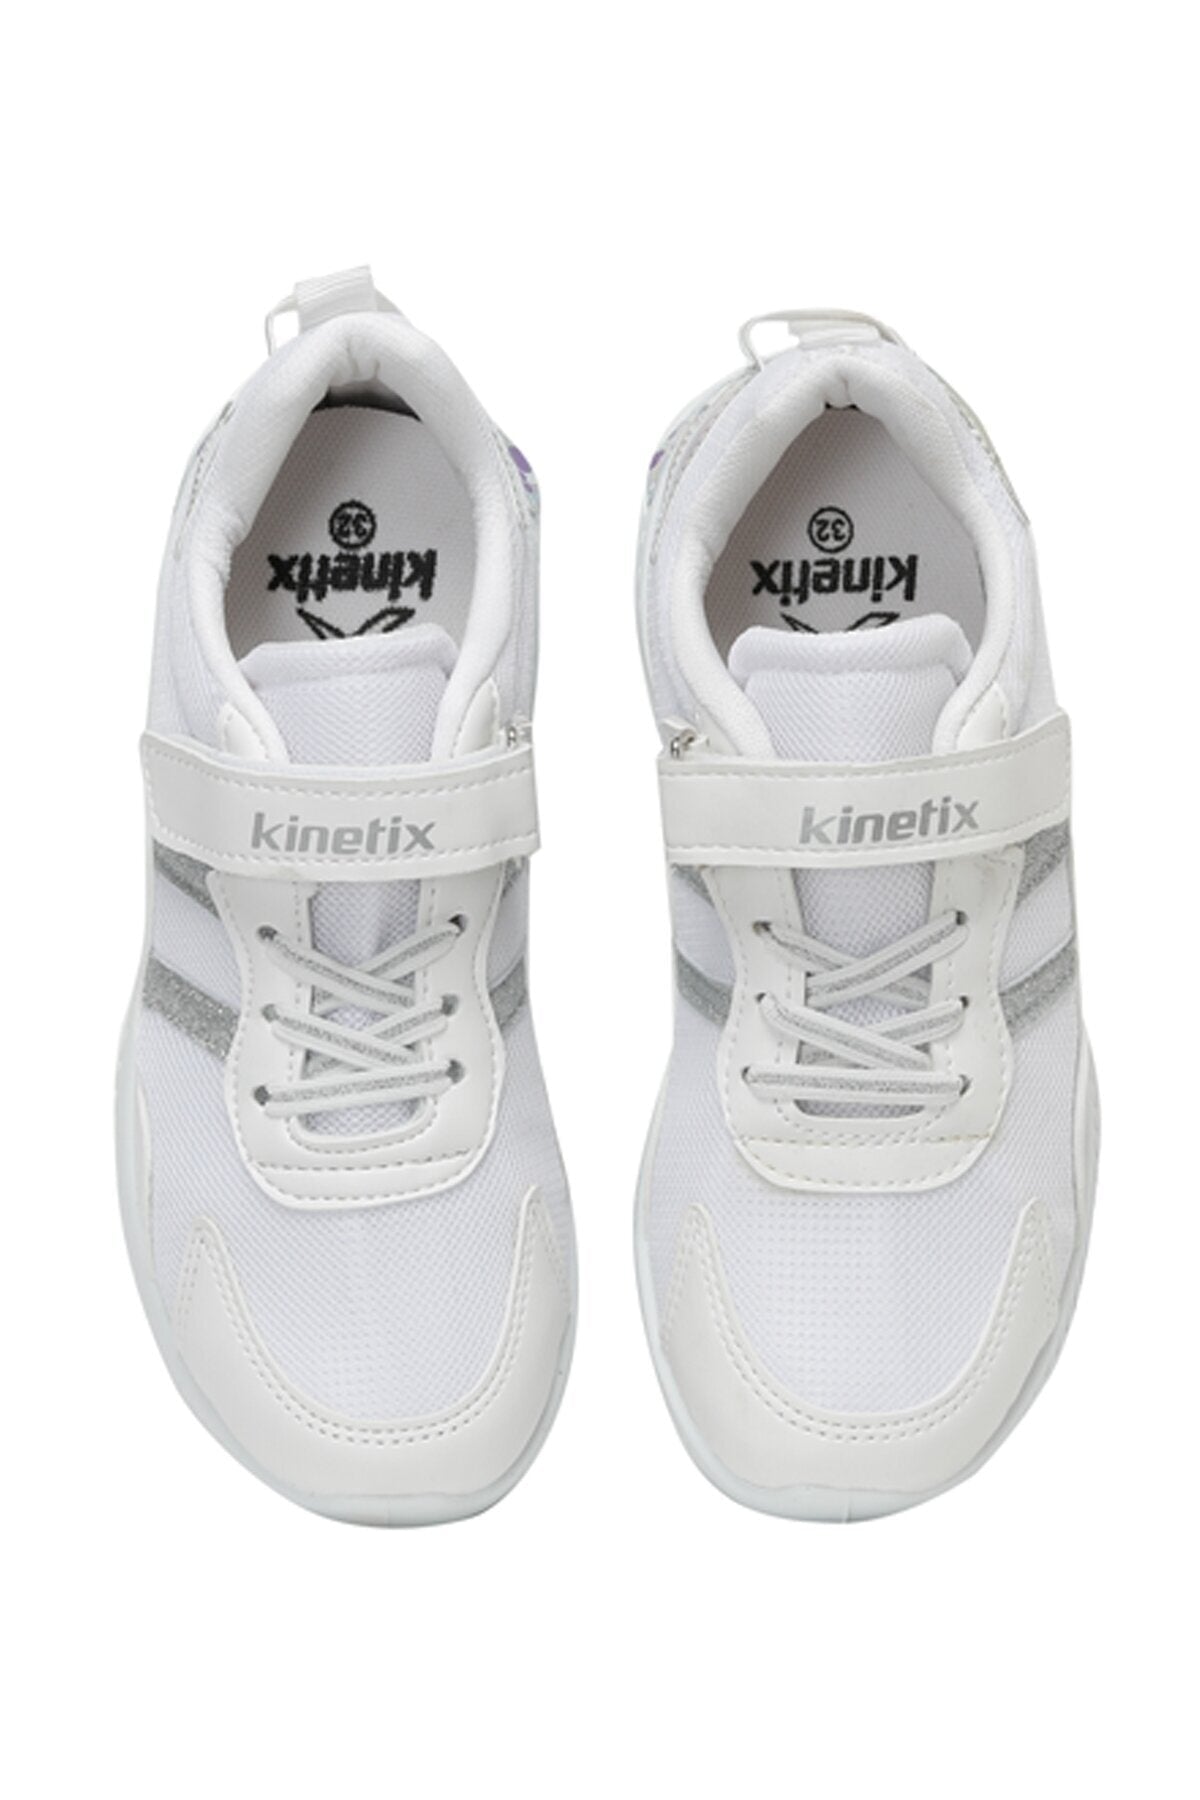 Dena Tx 3fx White Girls' Sneakers